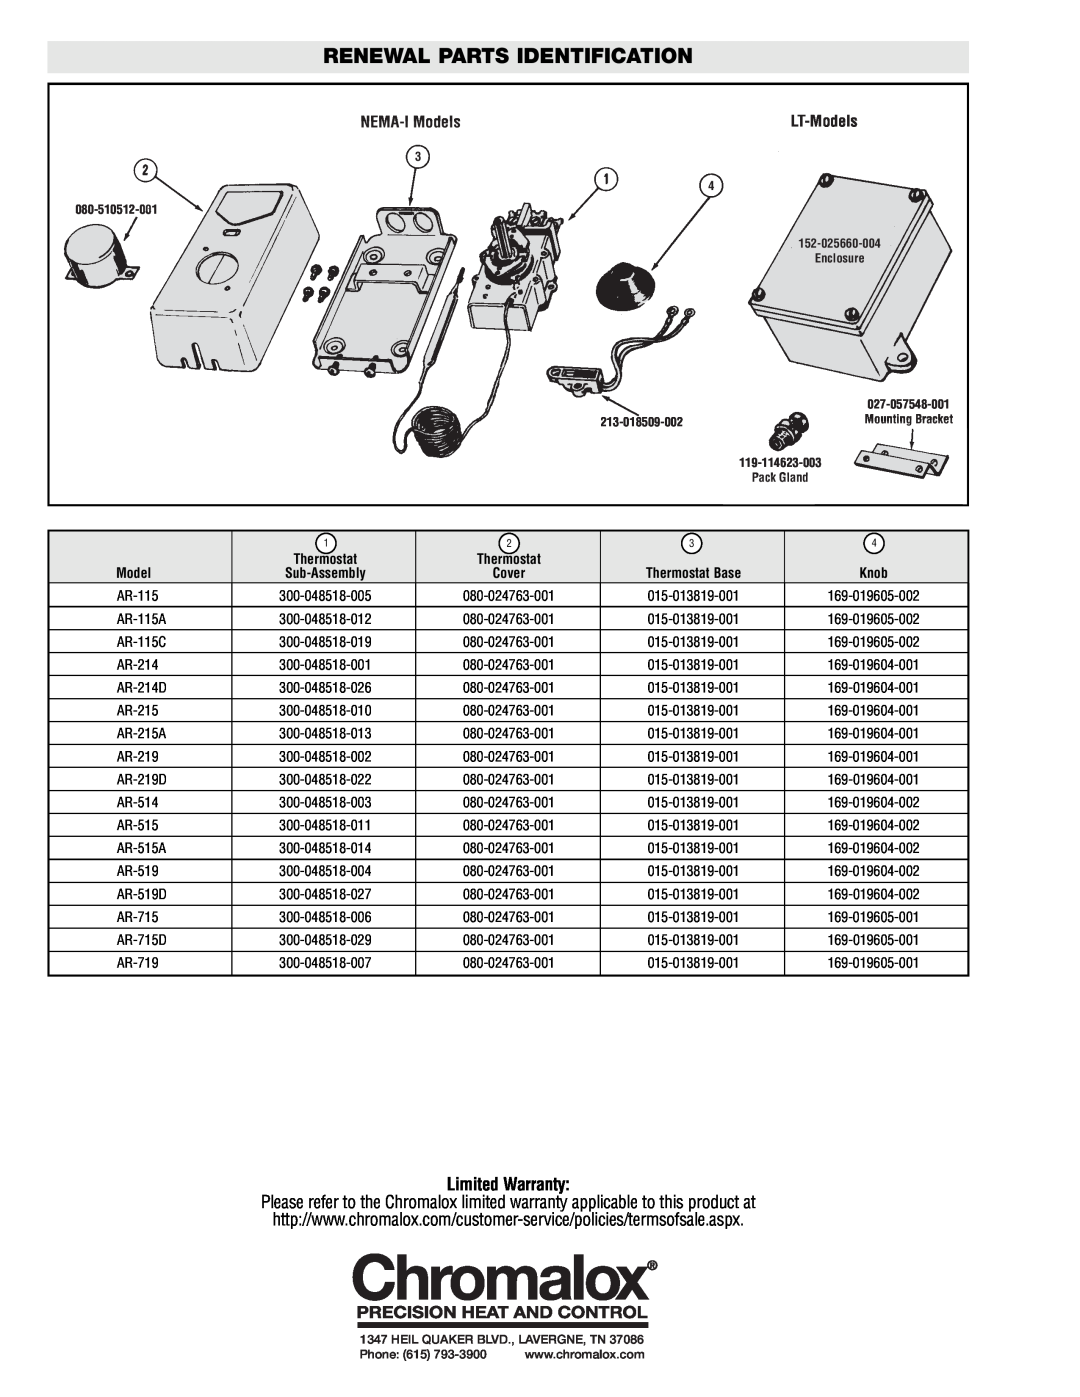 Chromalox PK405-18 installation instructions Renewal Parts Identification, Limited Warranty, NEMA-I Models, LT-Models 